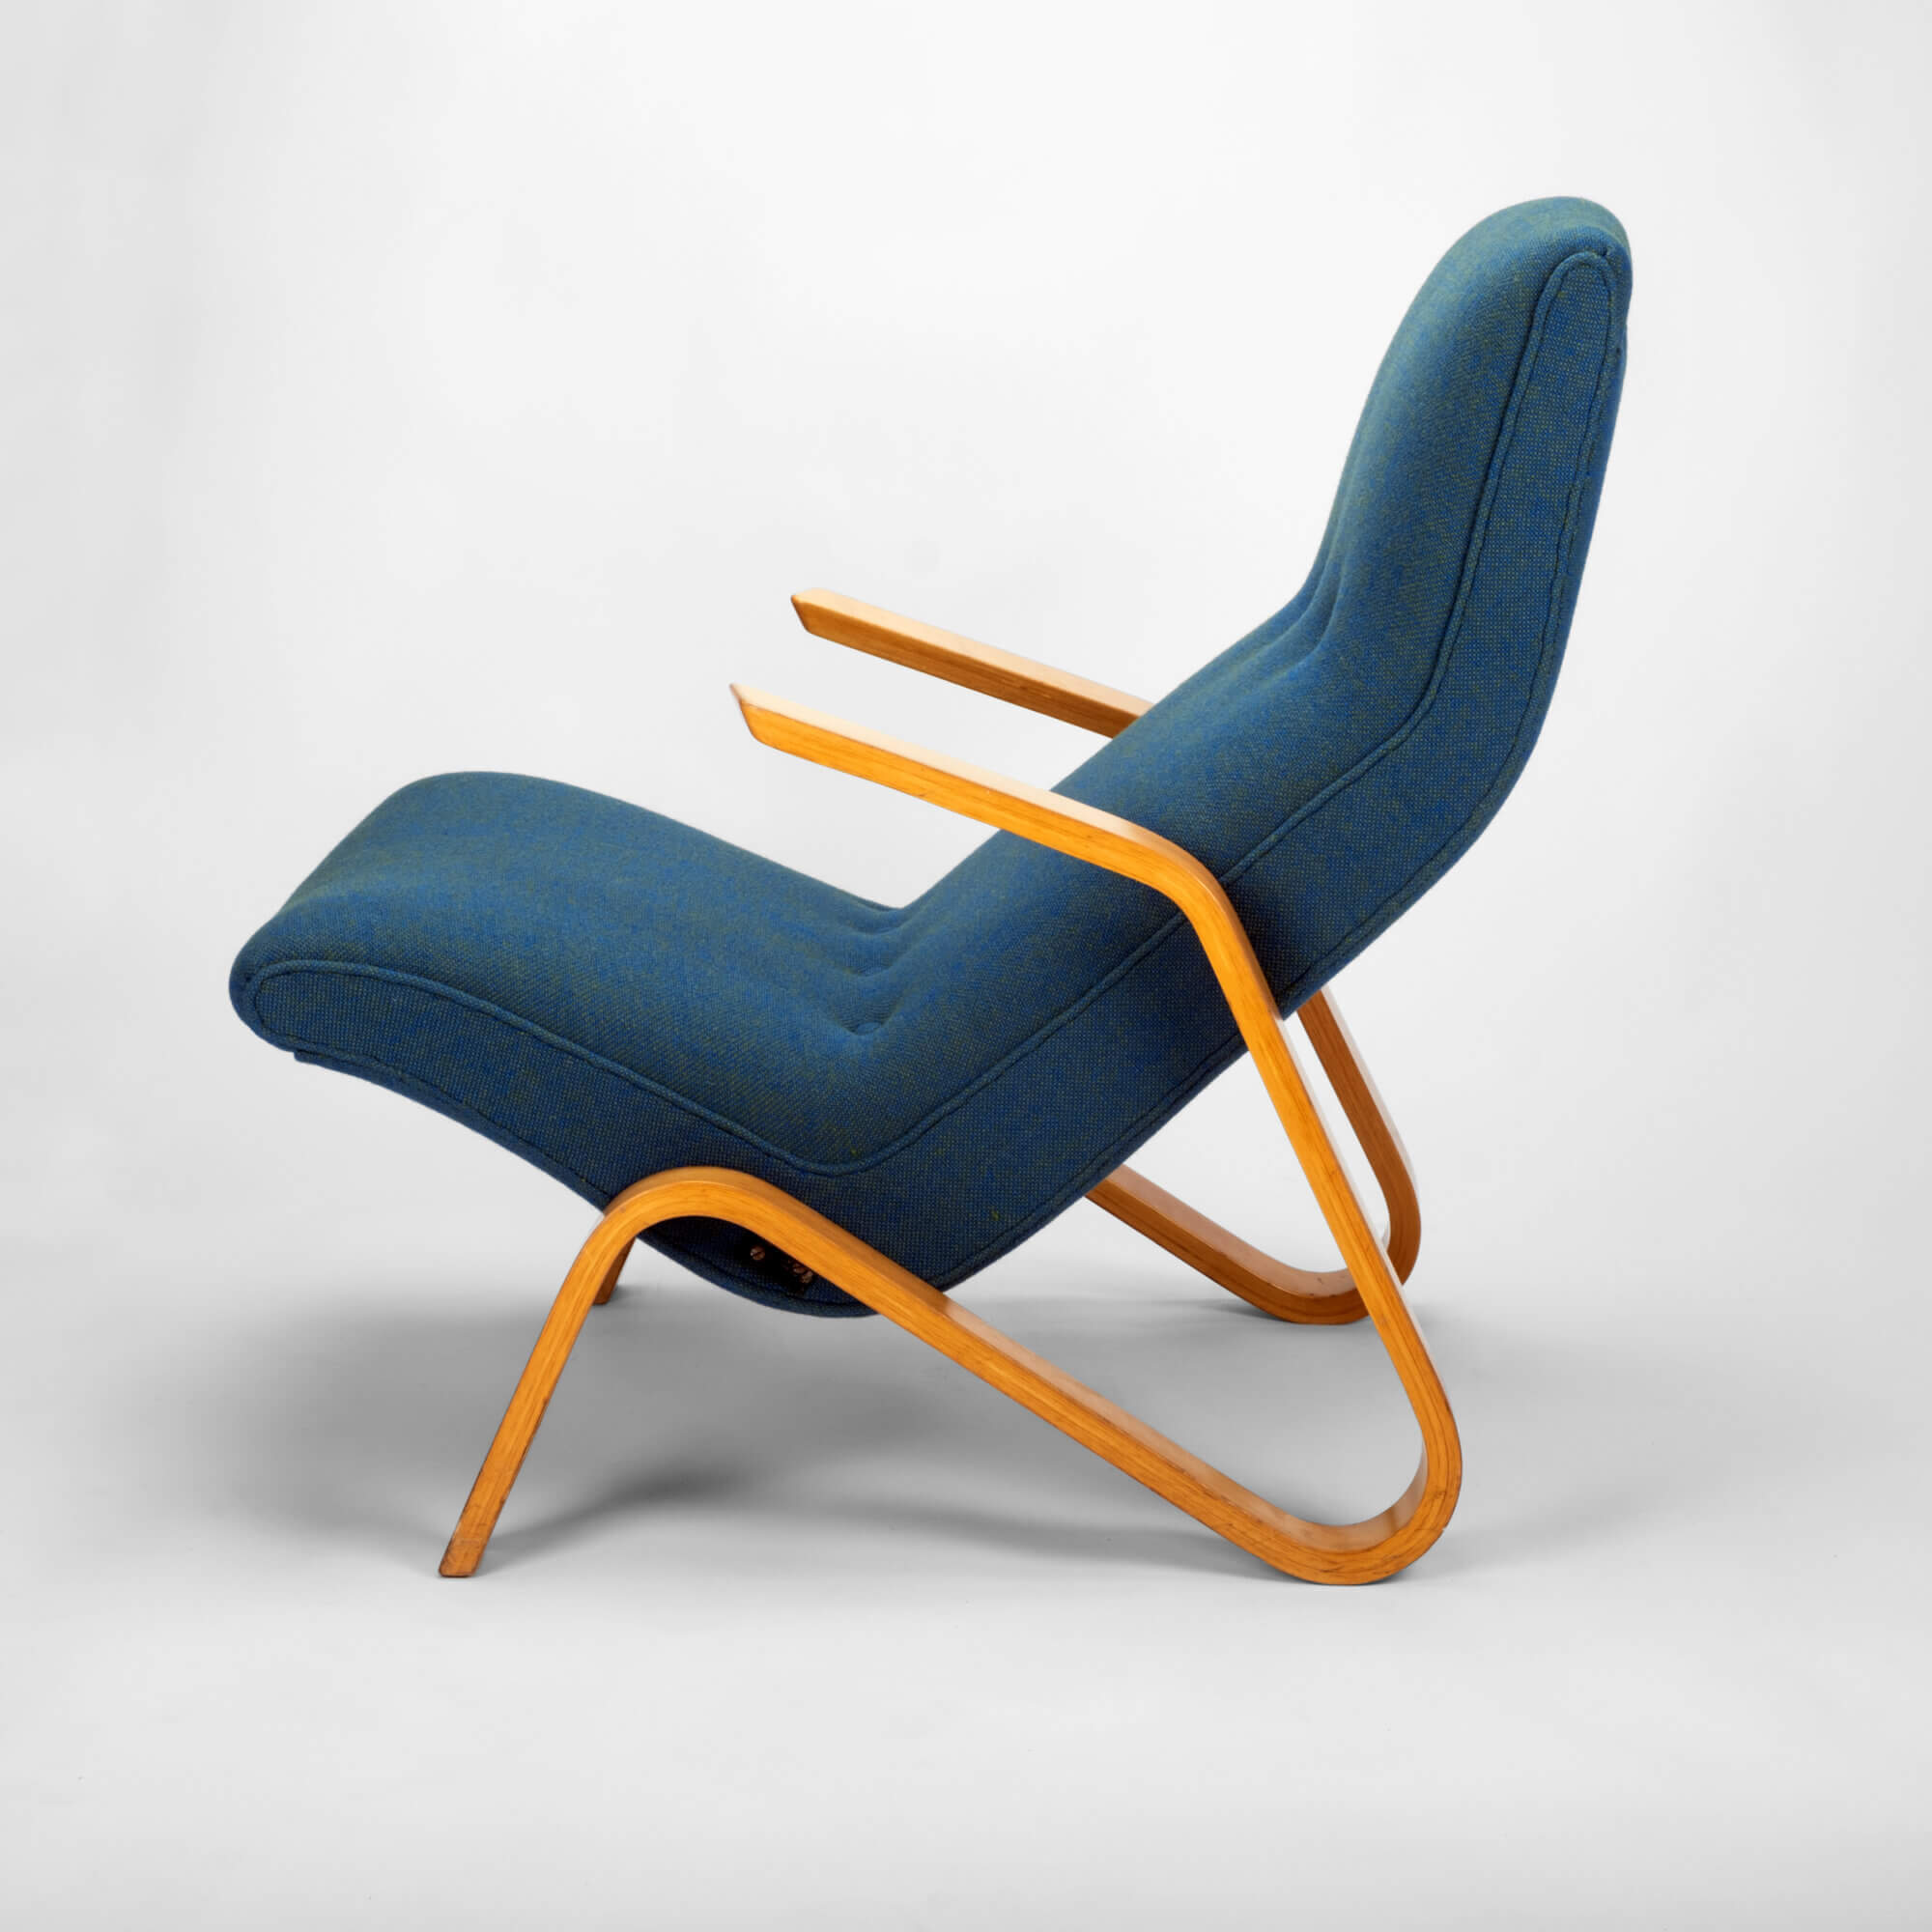 Eero Saarinen Grasshopper lounge chair shown from the side